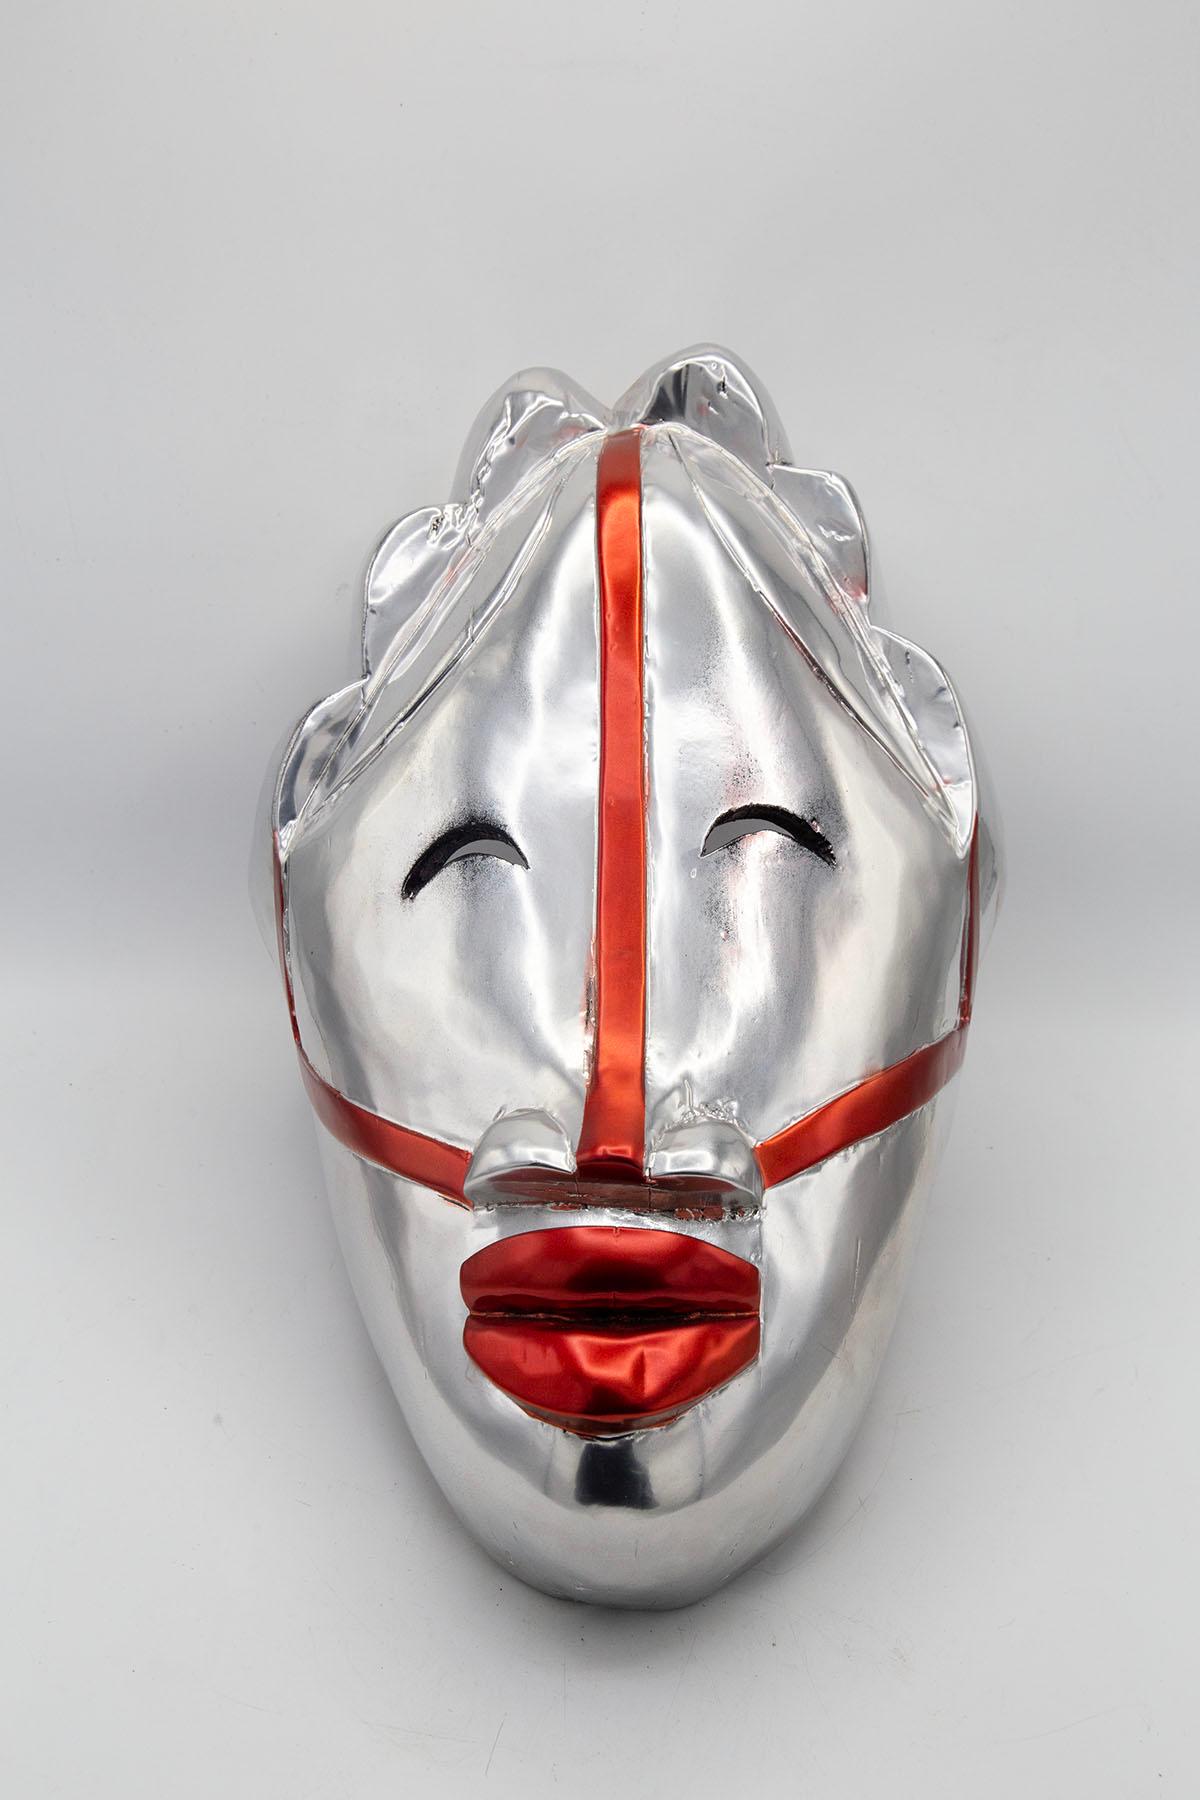 asuka mask